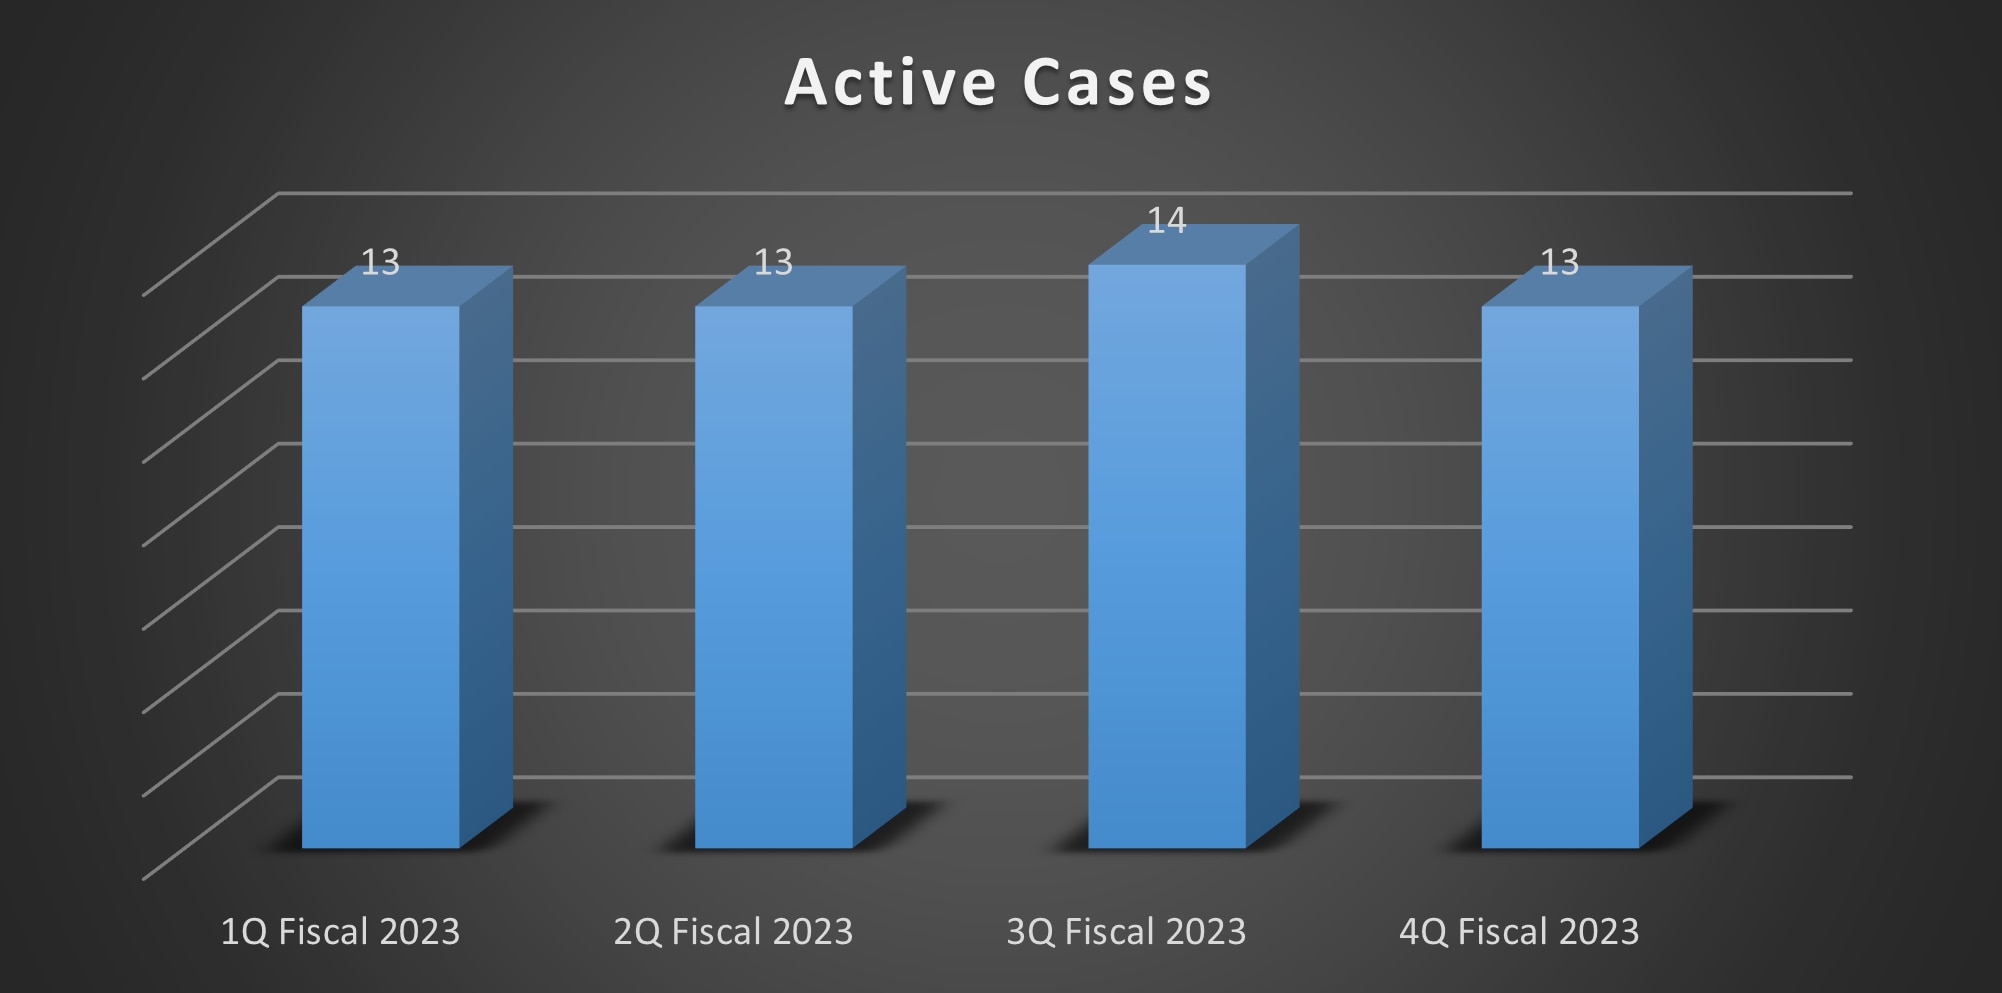 Q4 2023 Active Cases